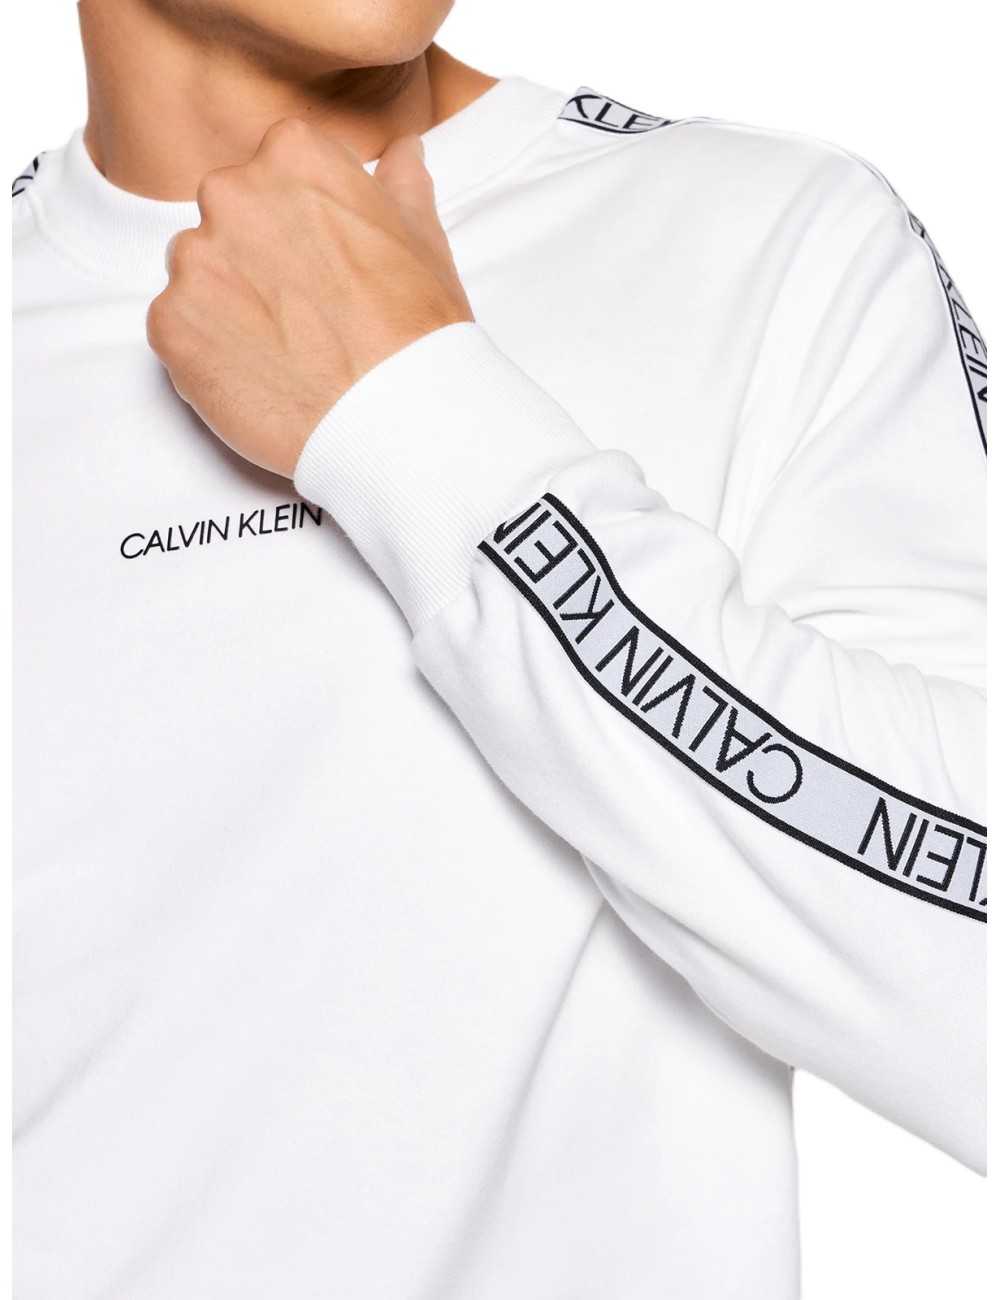 Calvin Klein felpa uomo Essential logo bianco girocollo - Felpe Uomo